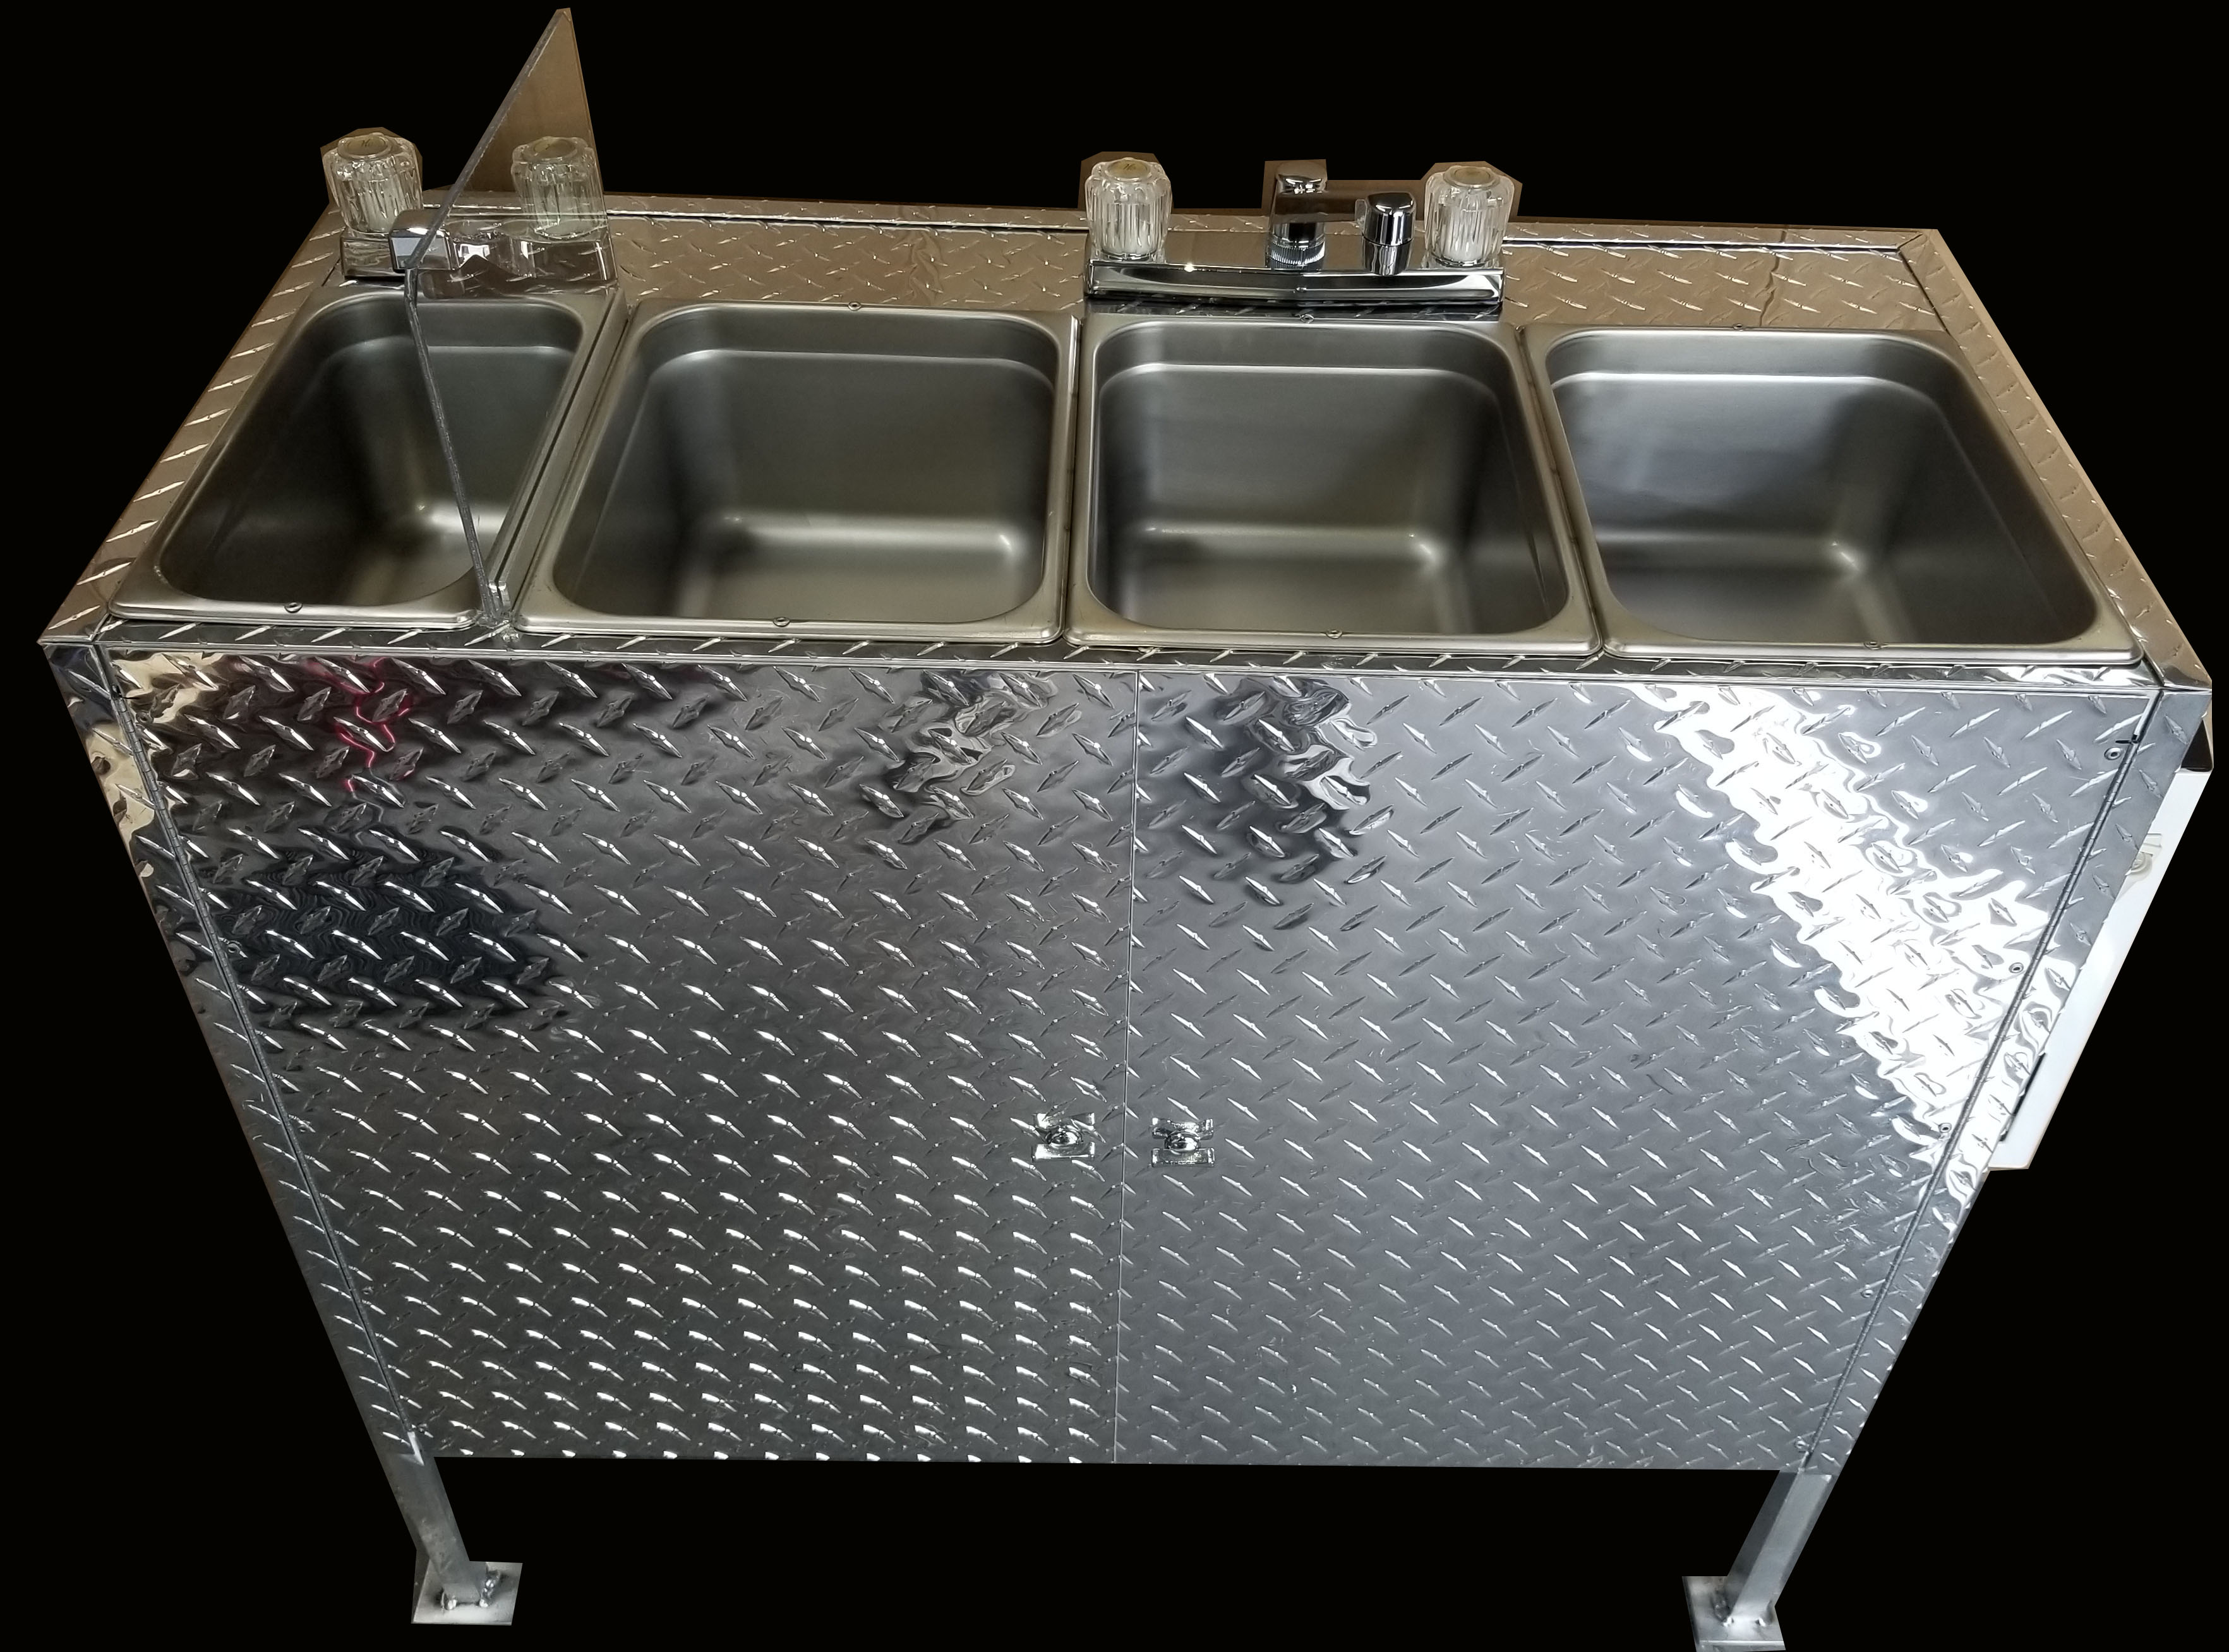 instant hot water system kitchen sink